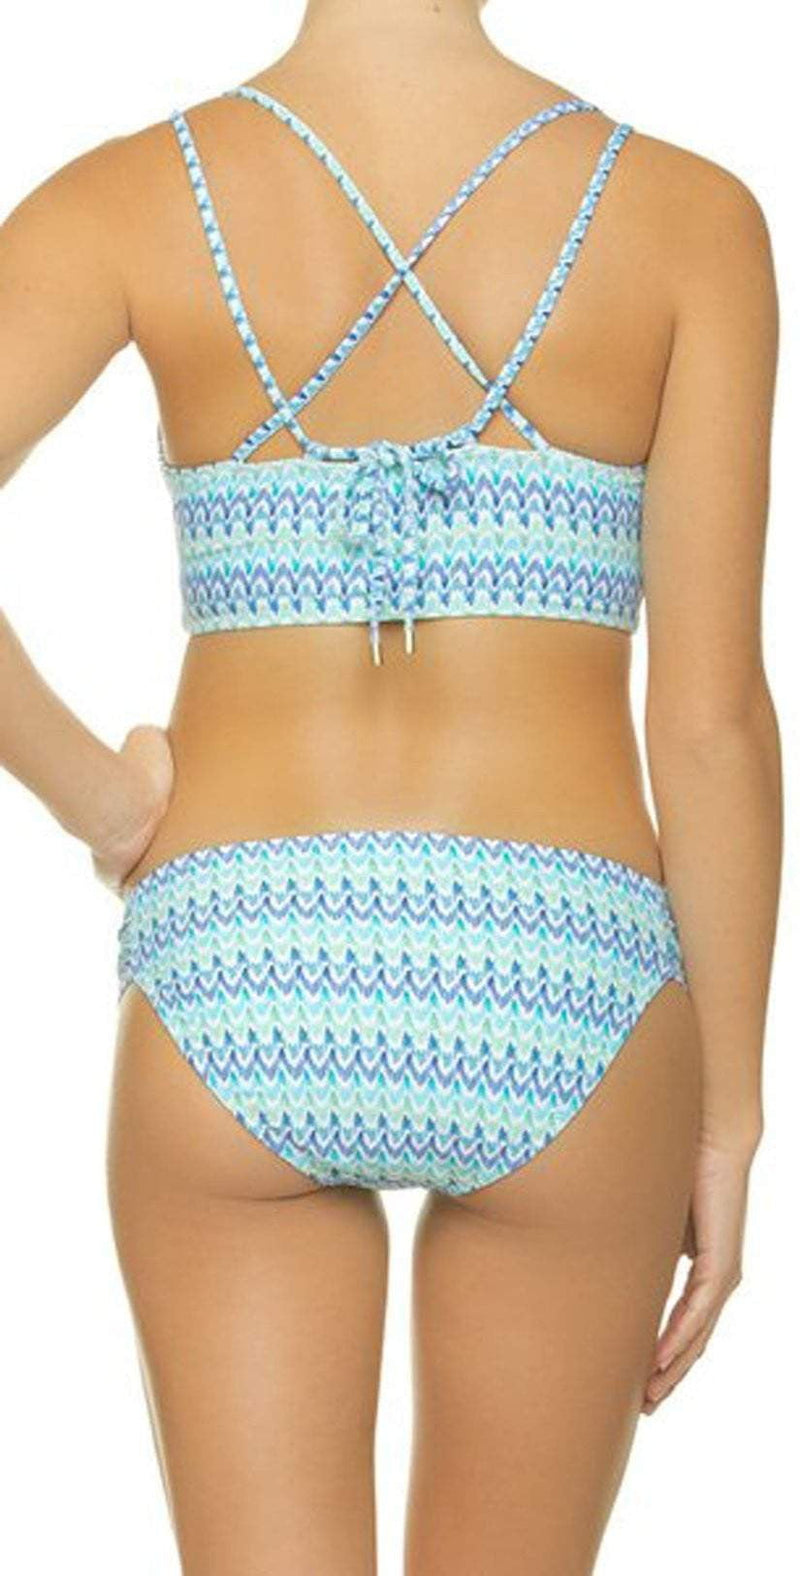 South Beach Swimsuits Helen Jon Beachcomber Retreat Bra Bikini